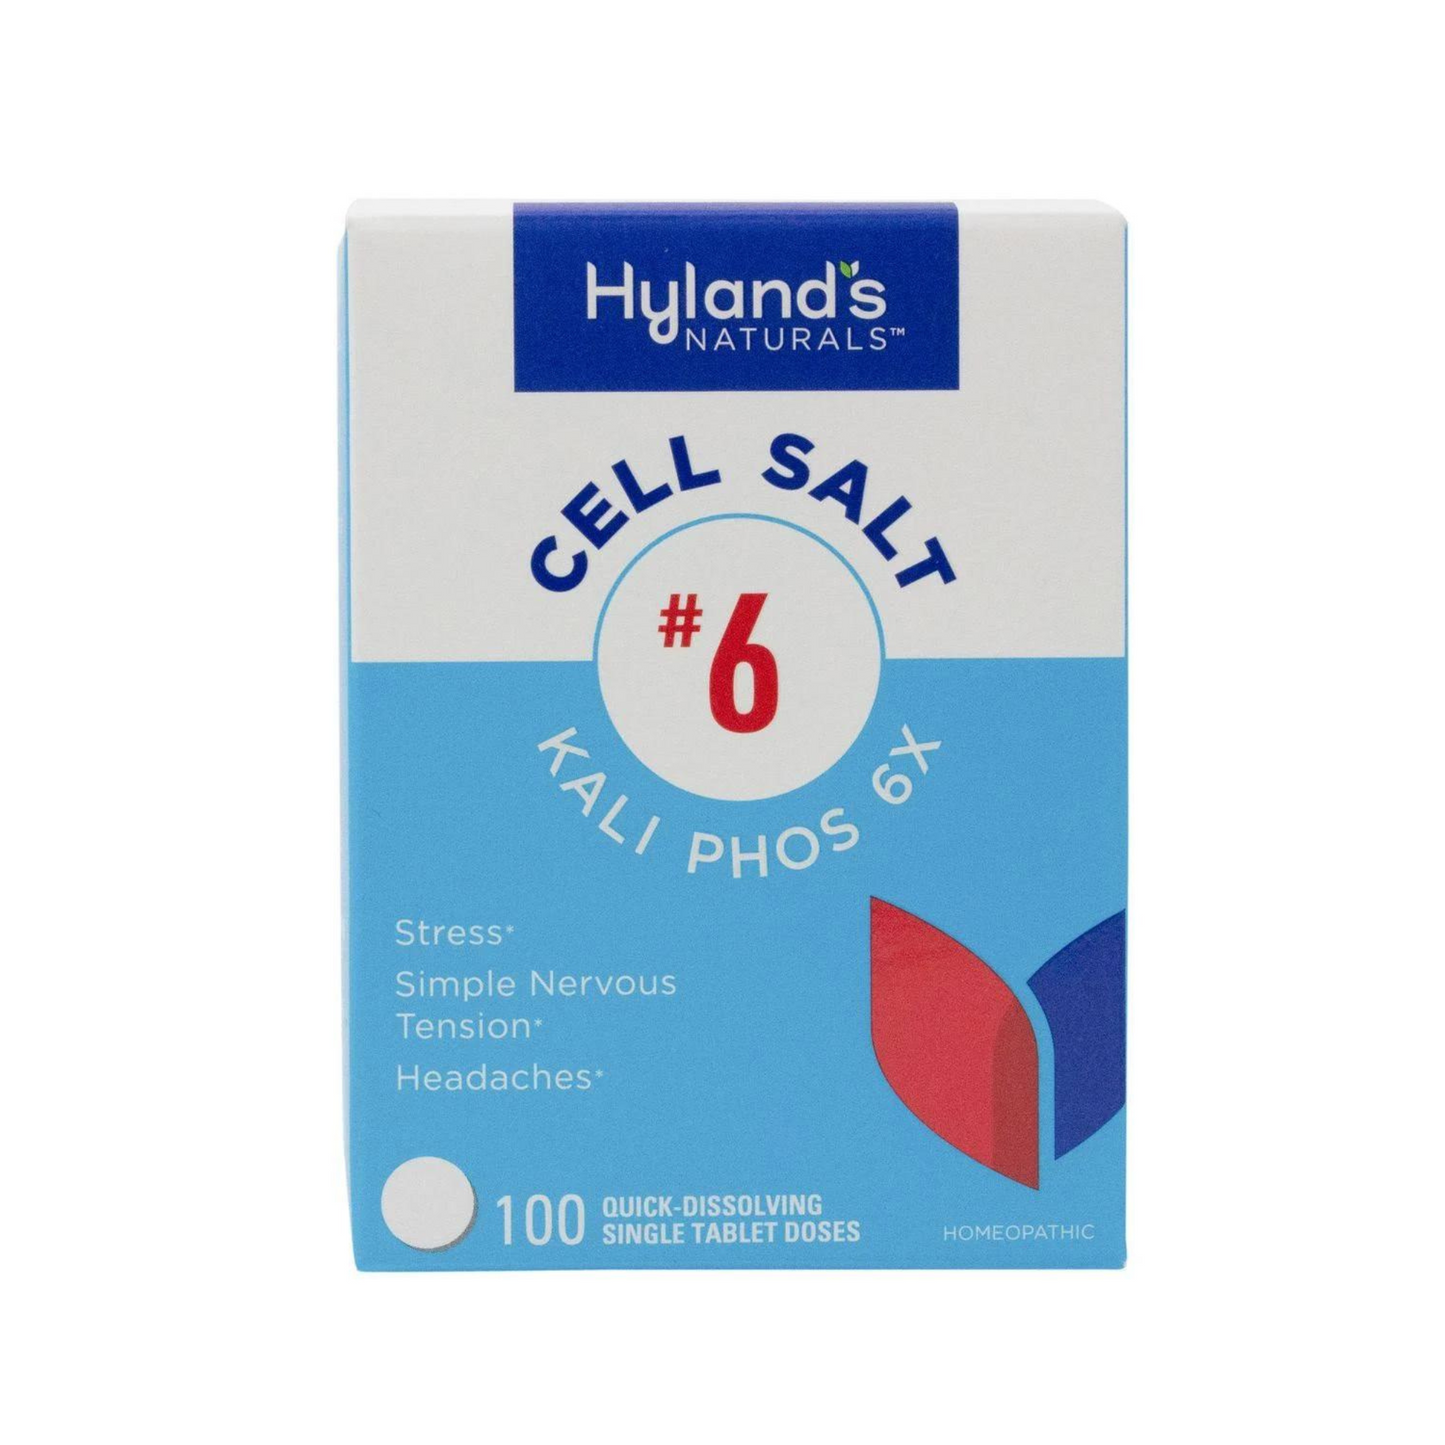 Primary Image of Hyland's Cell Salt Kali Phos 6x Tablets (100 count)